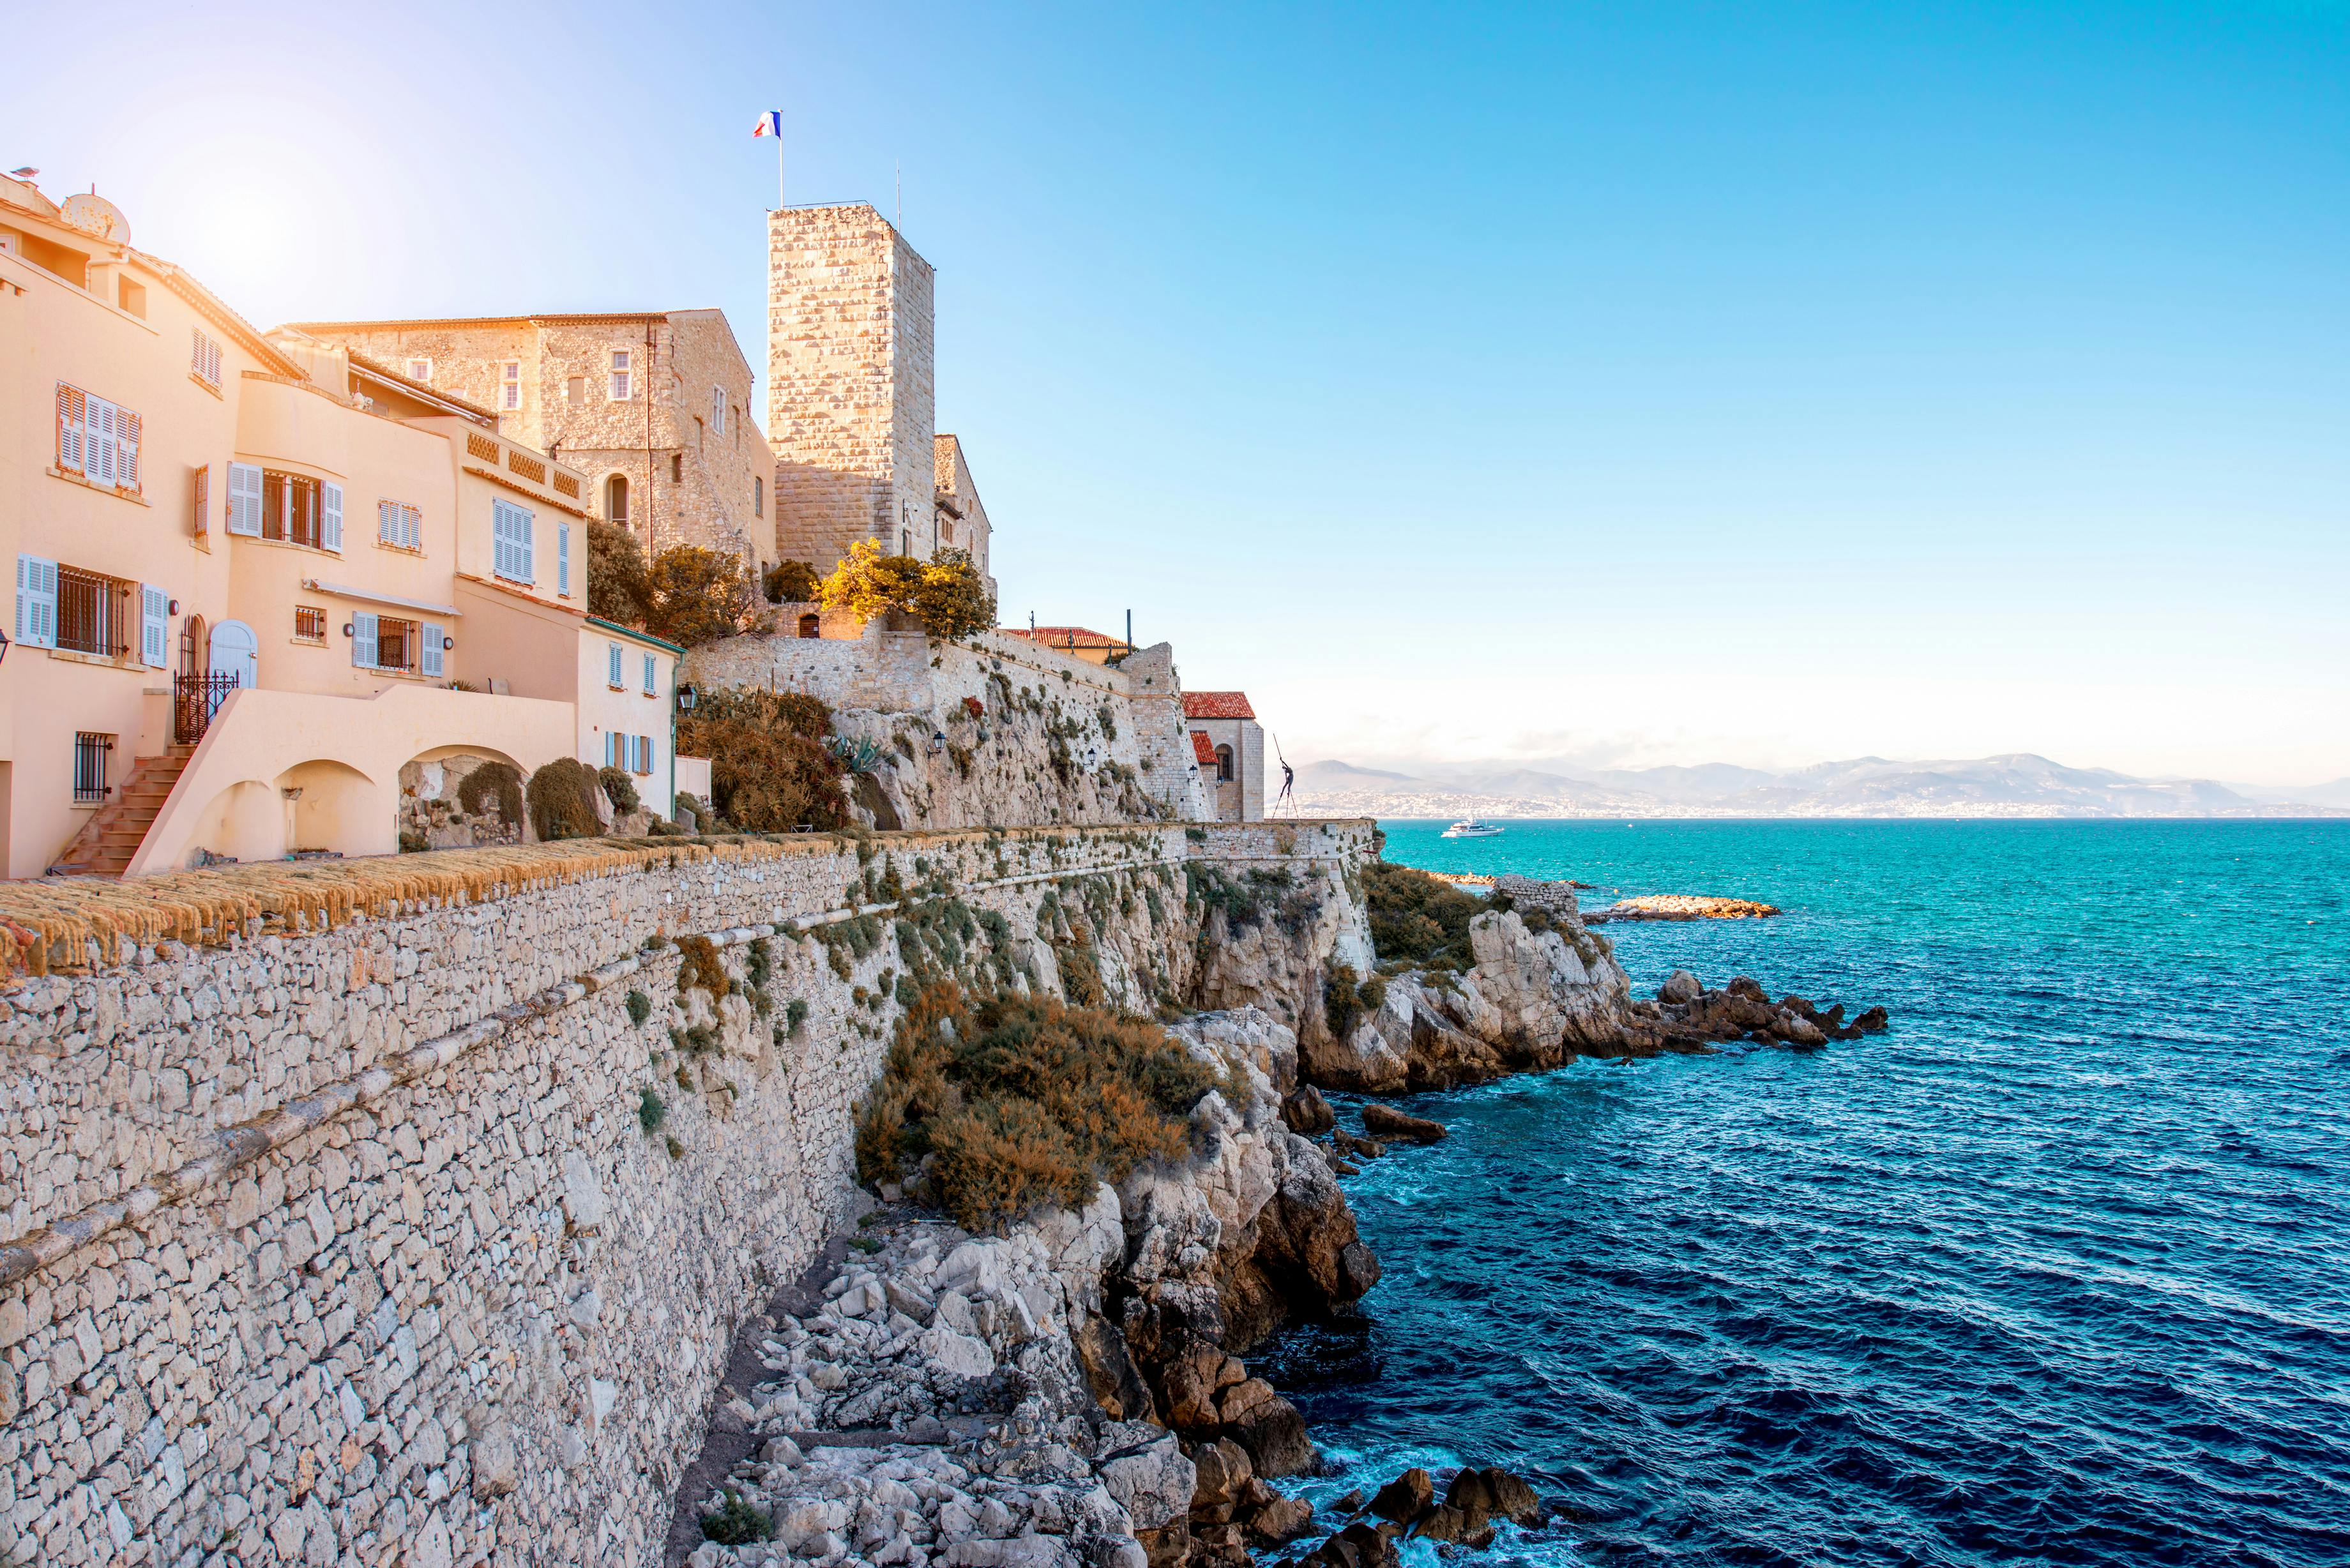 Gemeinsame Tour von Cannes, Antibes und Saint Paul de Vence ab Nizza